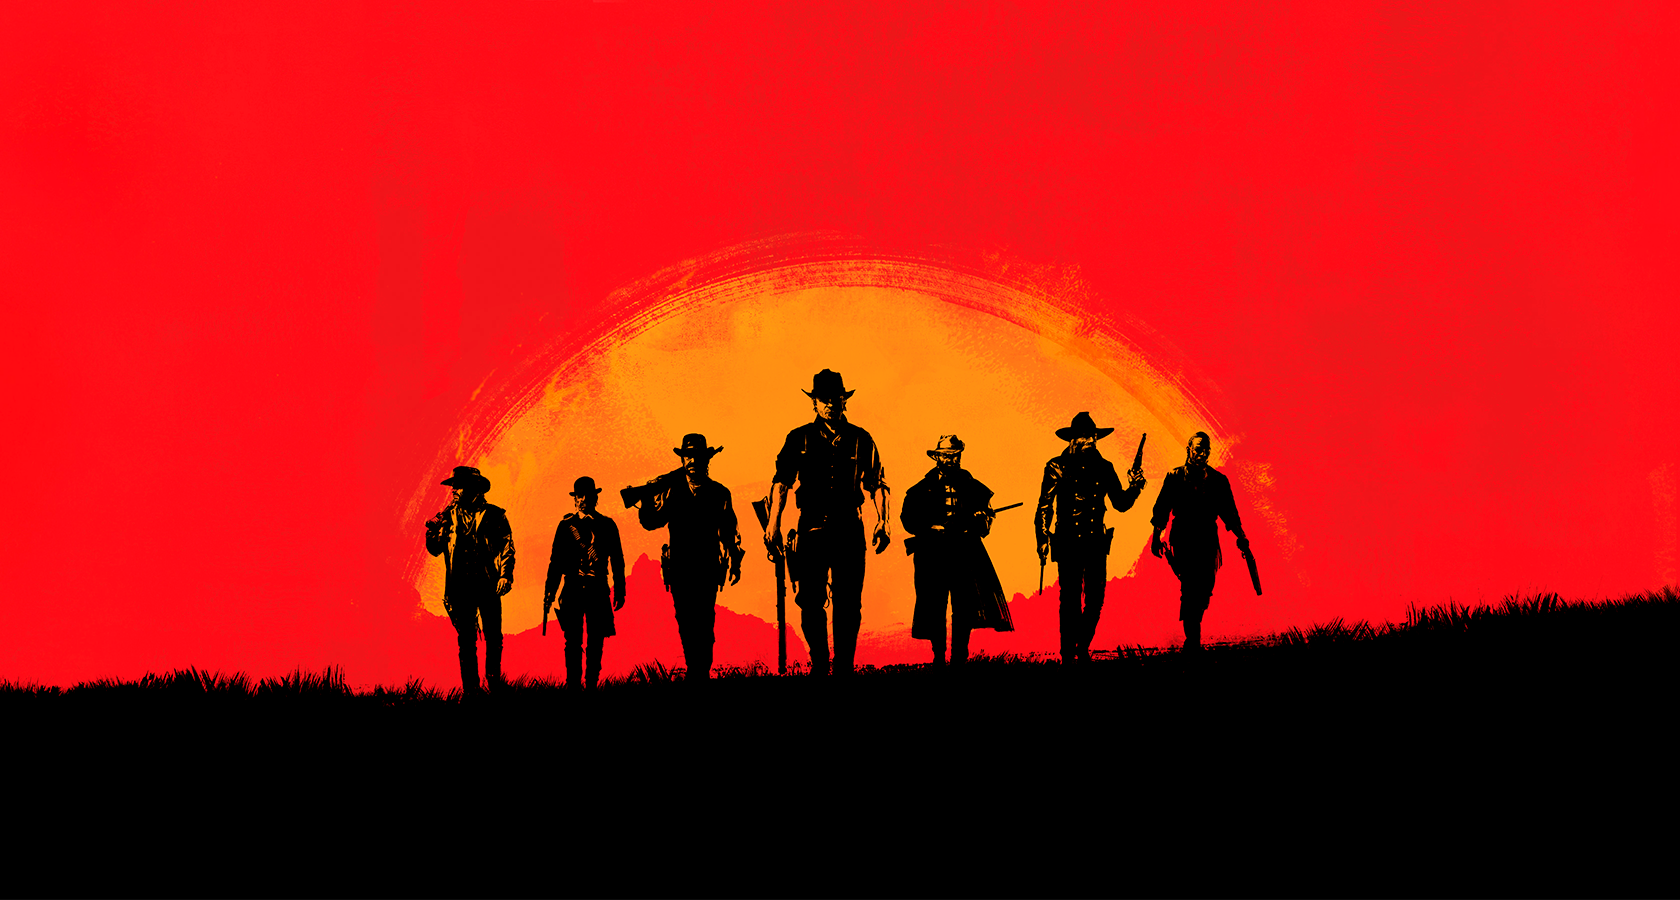 РДР 2. Red Dead Redemption 2 poster. Red Redemption 2. Red Dead Redemption 2 Постер.